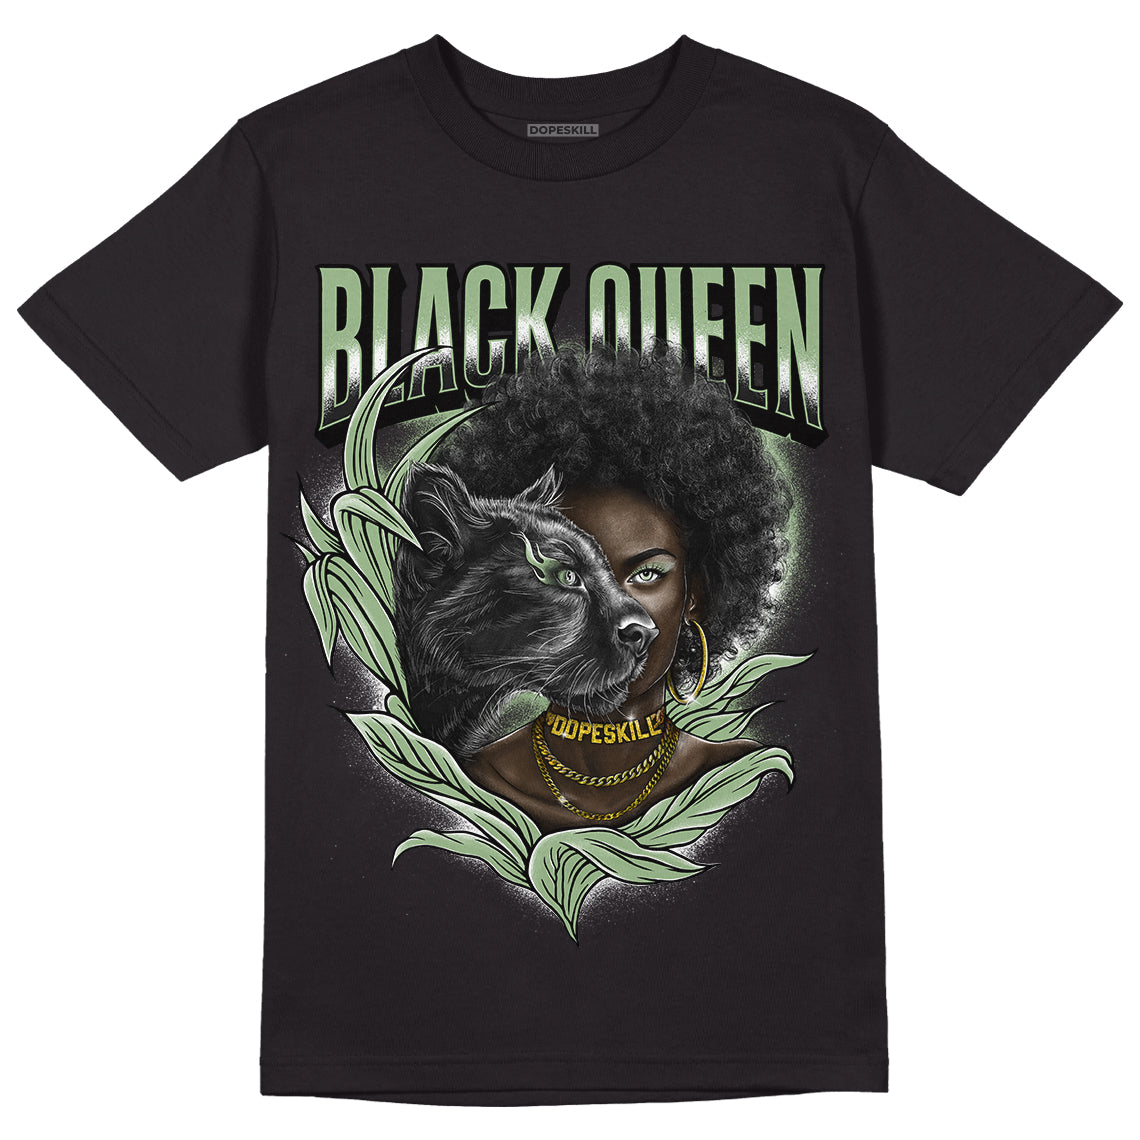 Seafoam 4s DopeSkill T-Shirt New Black Queen Graphic - Black